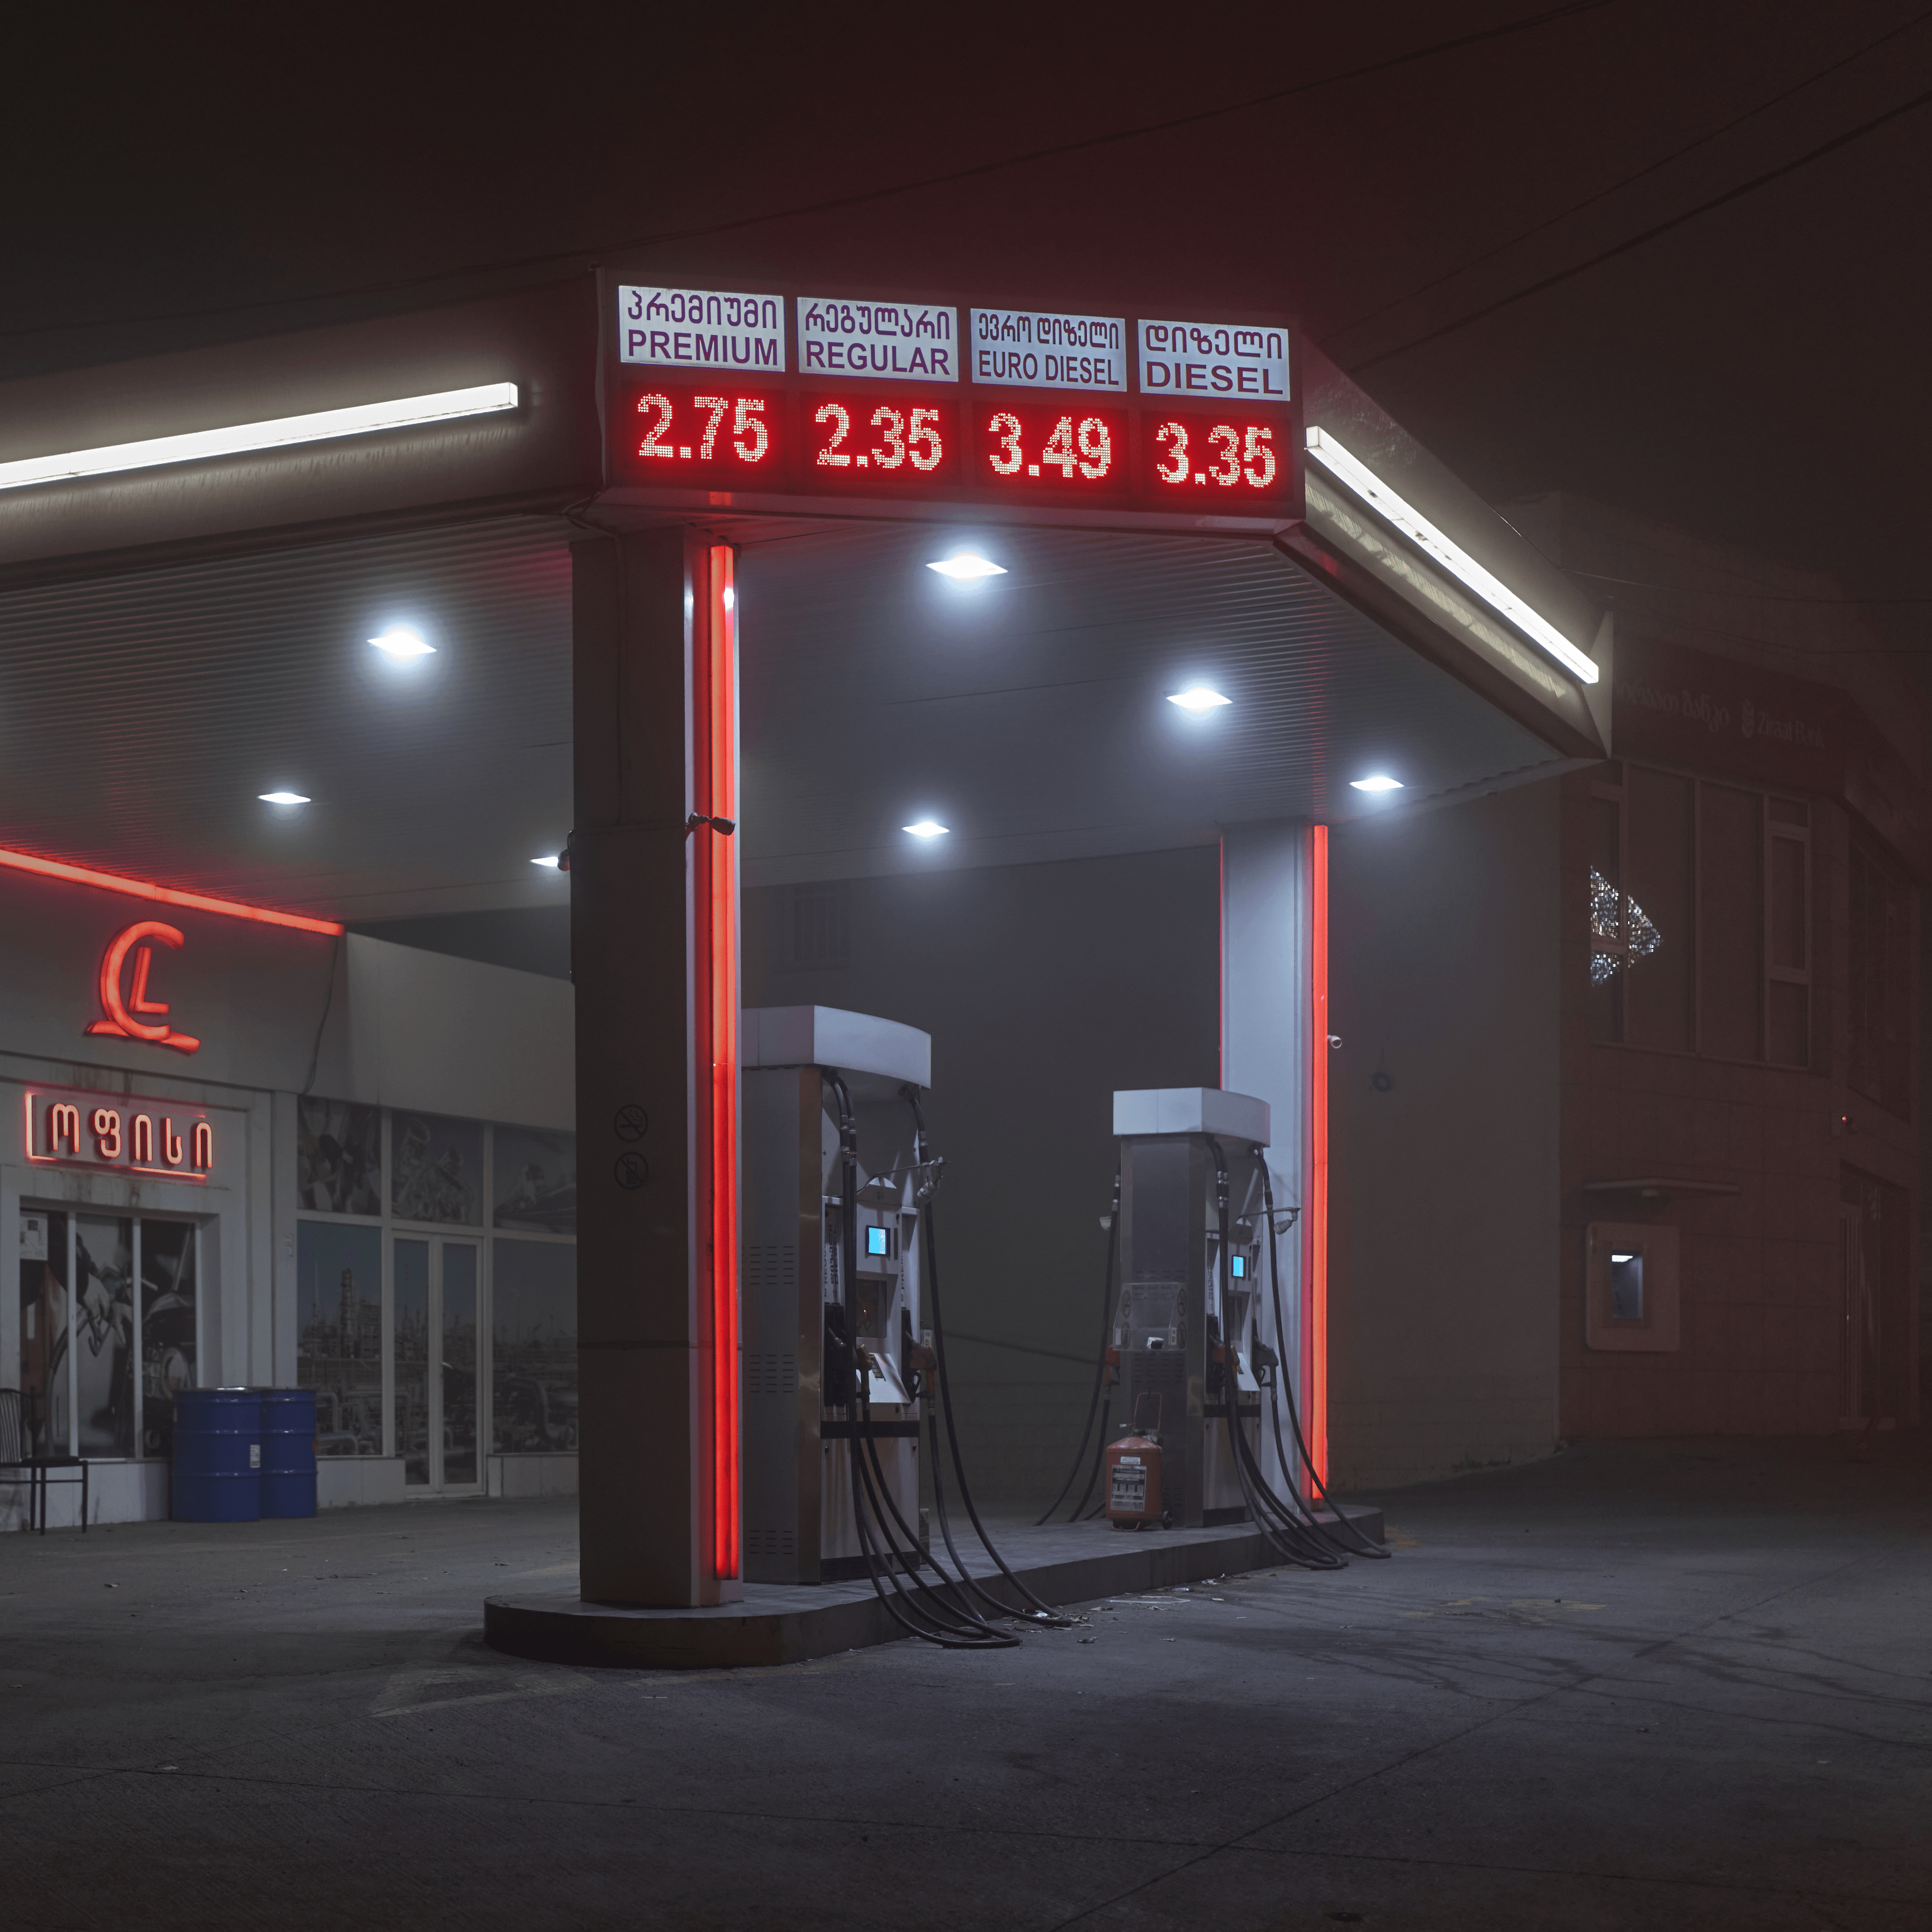 Fueling station